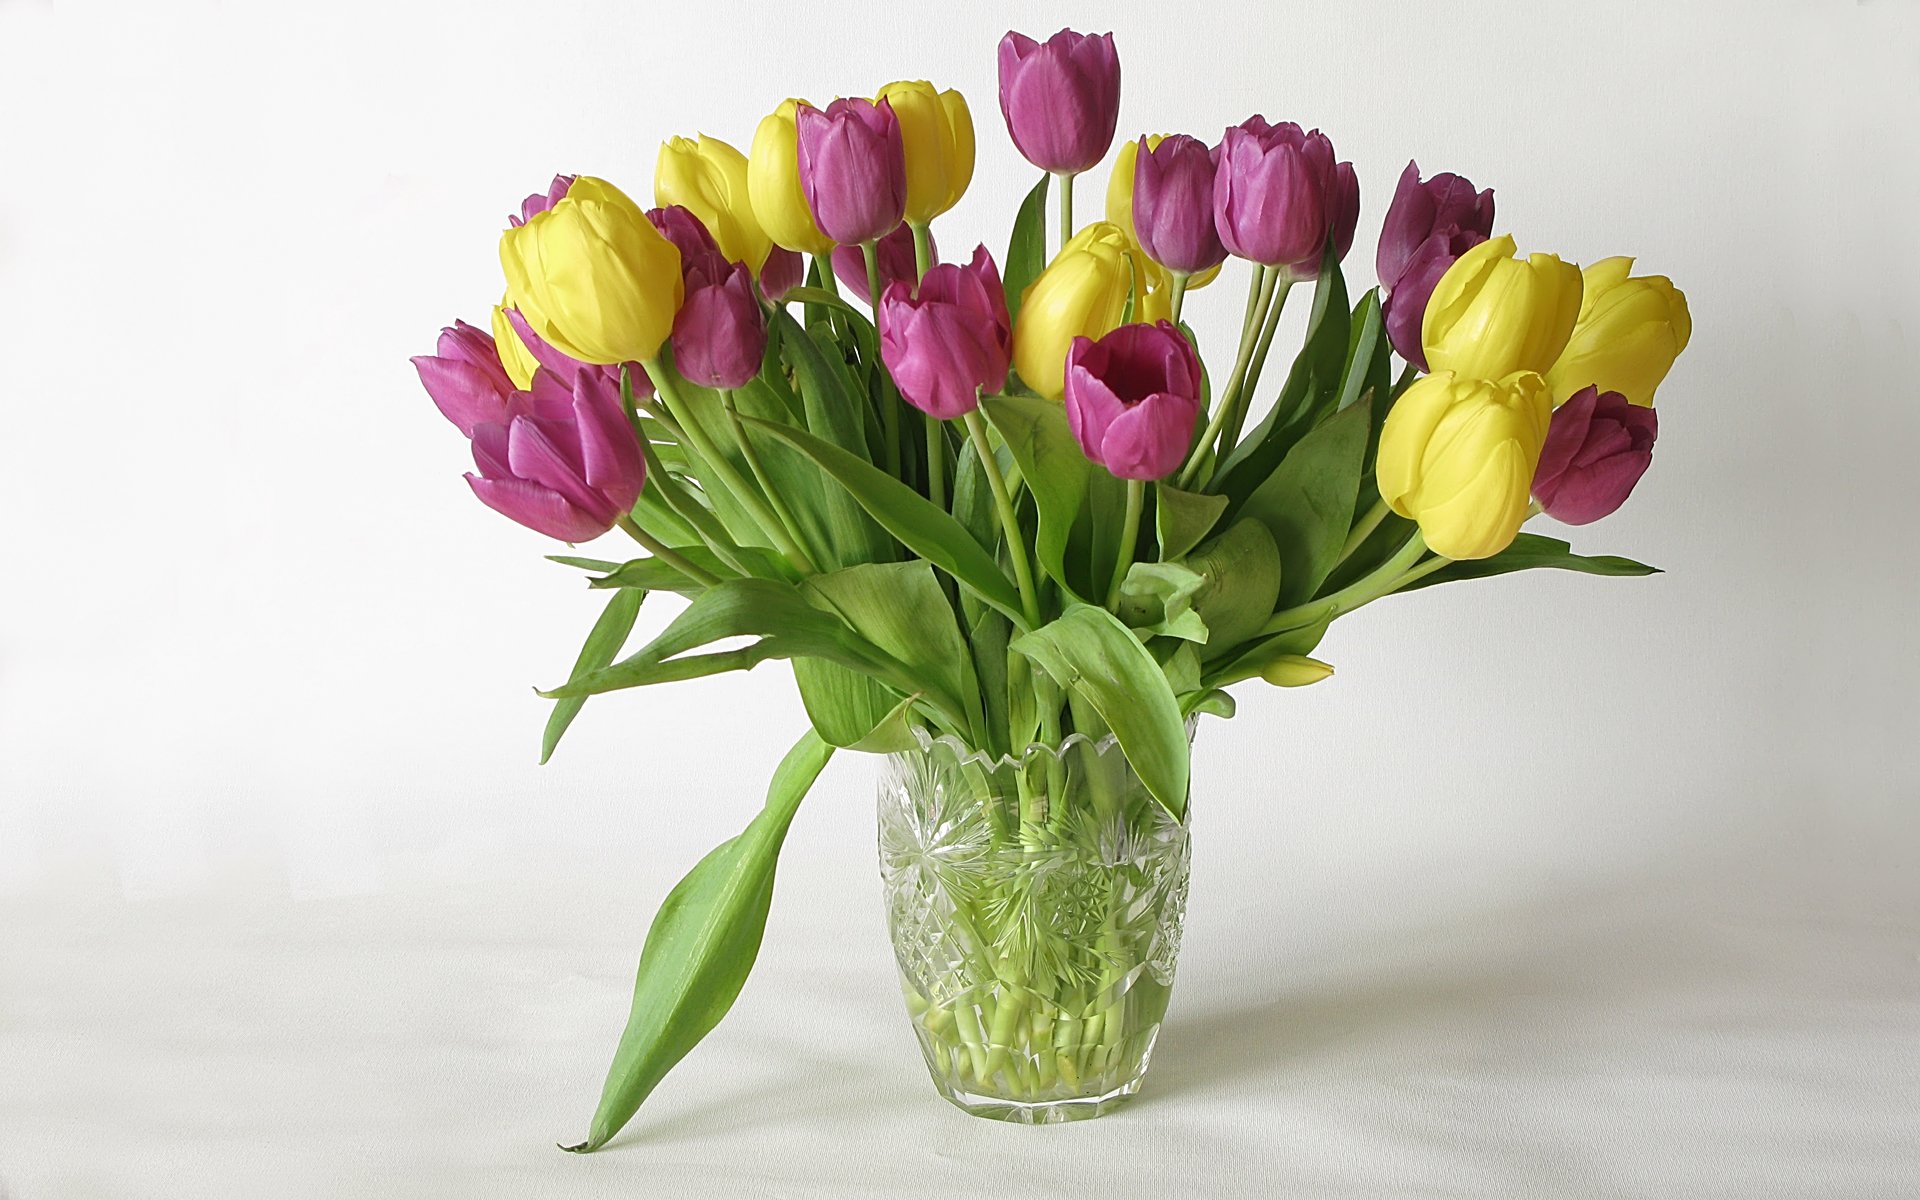 Фото тюльпаны в вазе на столе. Тюльпаны в вазе. Красивые тюльпаны в вазе. Букет тюльпанов в вазе. Красивый букет тюльпанов в вазе.